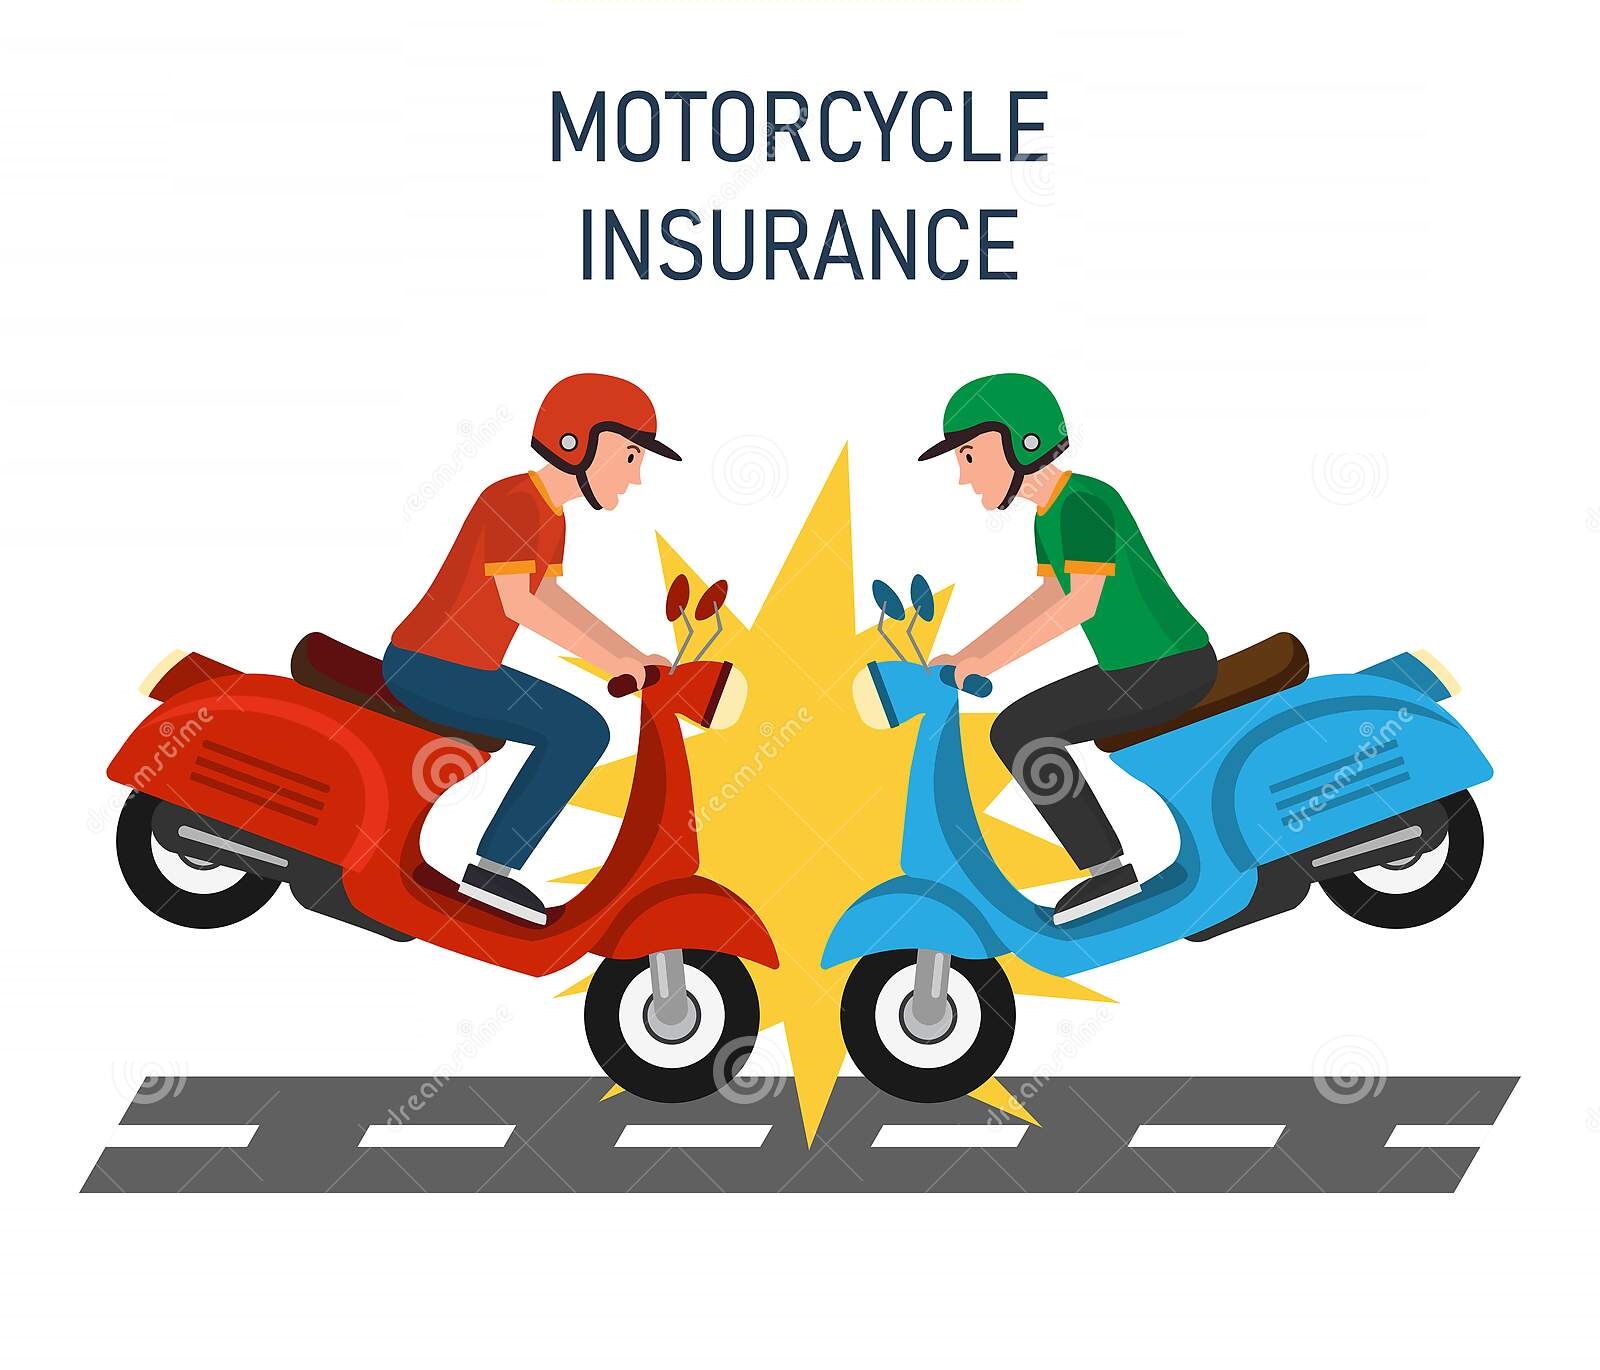 Motorcycle Insurance Market is Booming Worldwide | Zurich Insurance Group, Farmers Insurance, Allstate, AXA